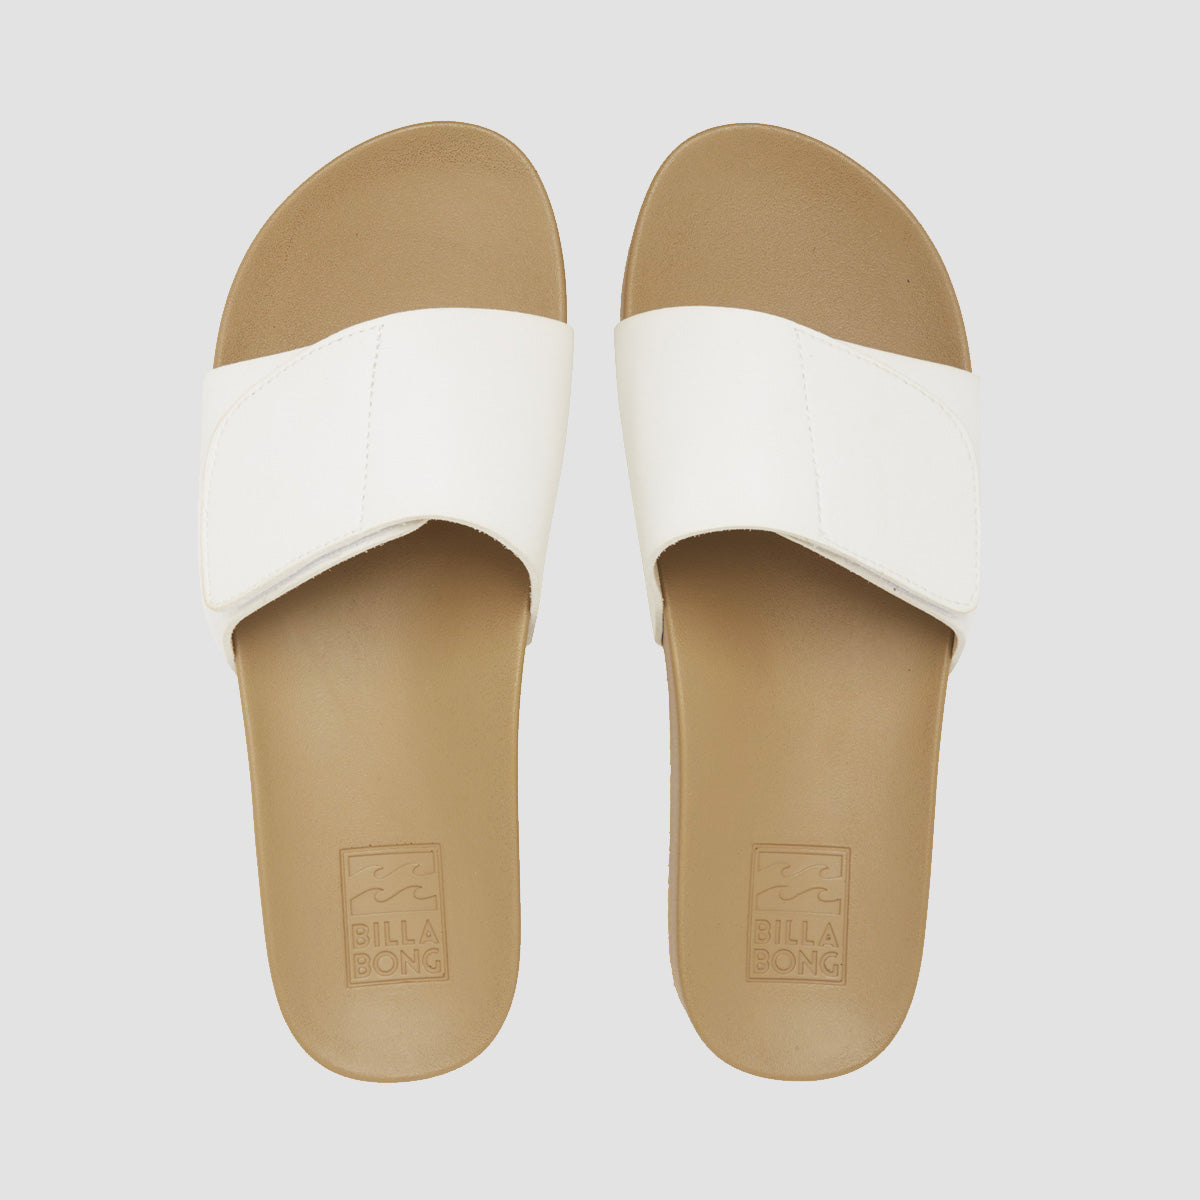 Billabong Coronado Sandals White - Womens